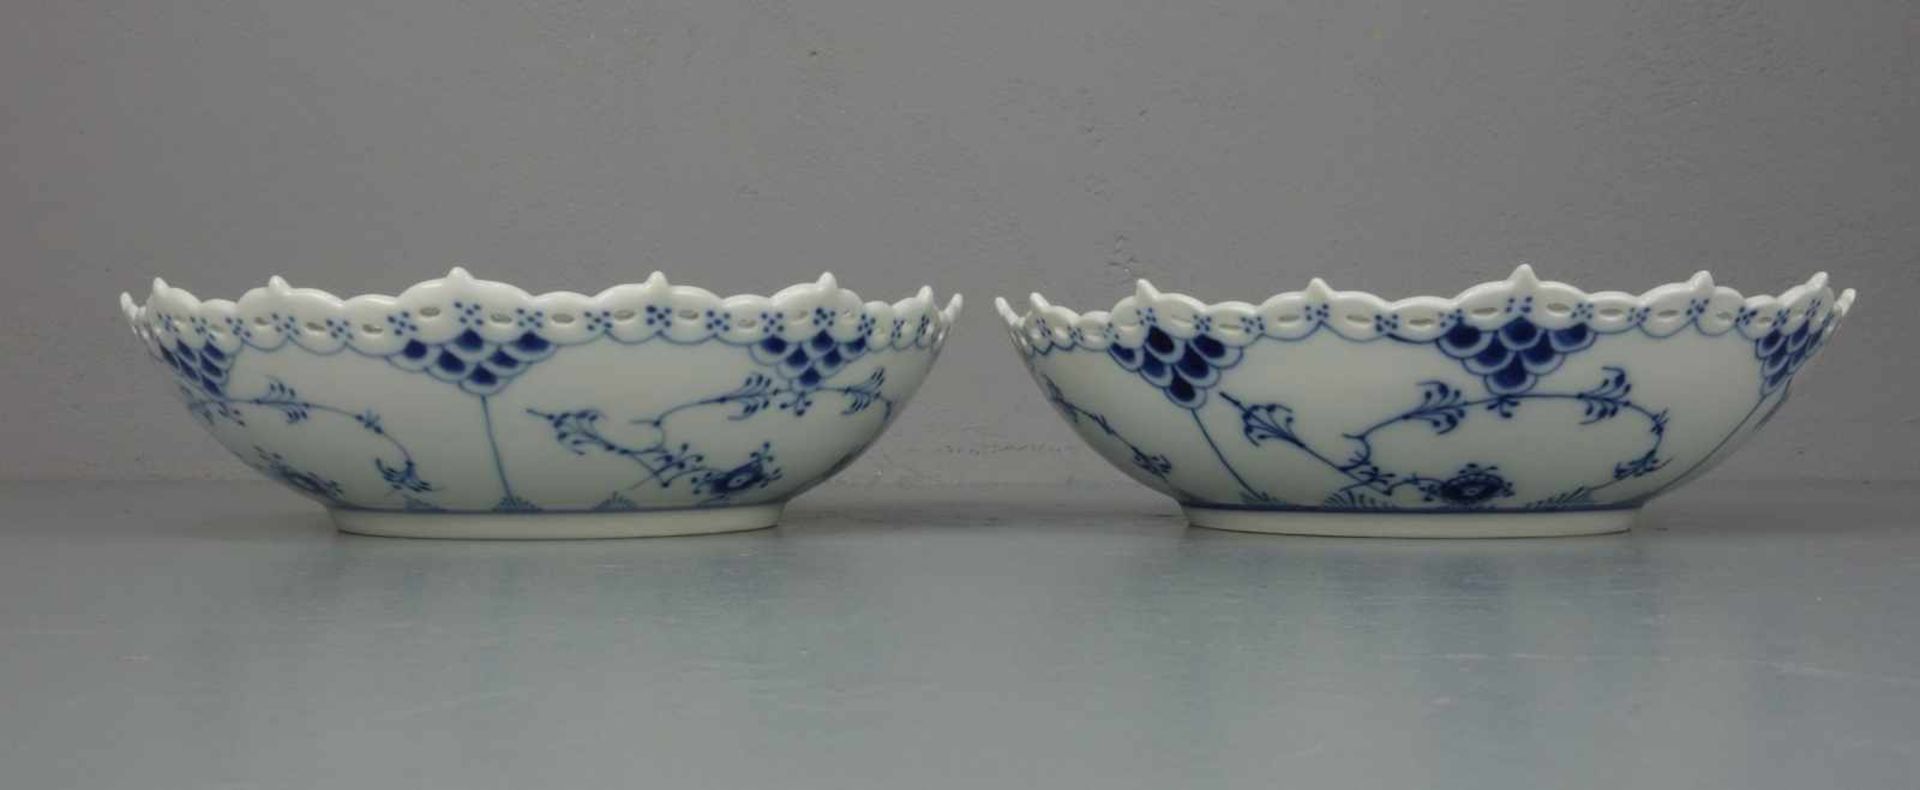 PAAR SCHALEN / two bowls, "MUSSELMALET VOLLSPITZE", Porzellan, Manufaktur Royal Copenhagen, - Bild 3 aus 4